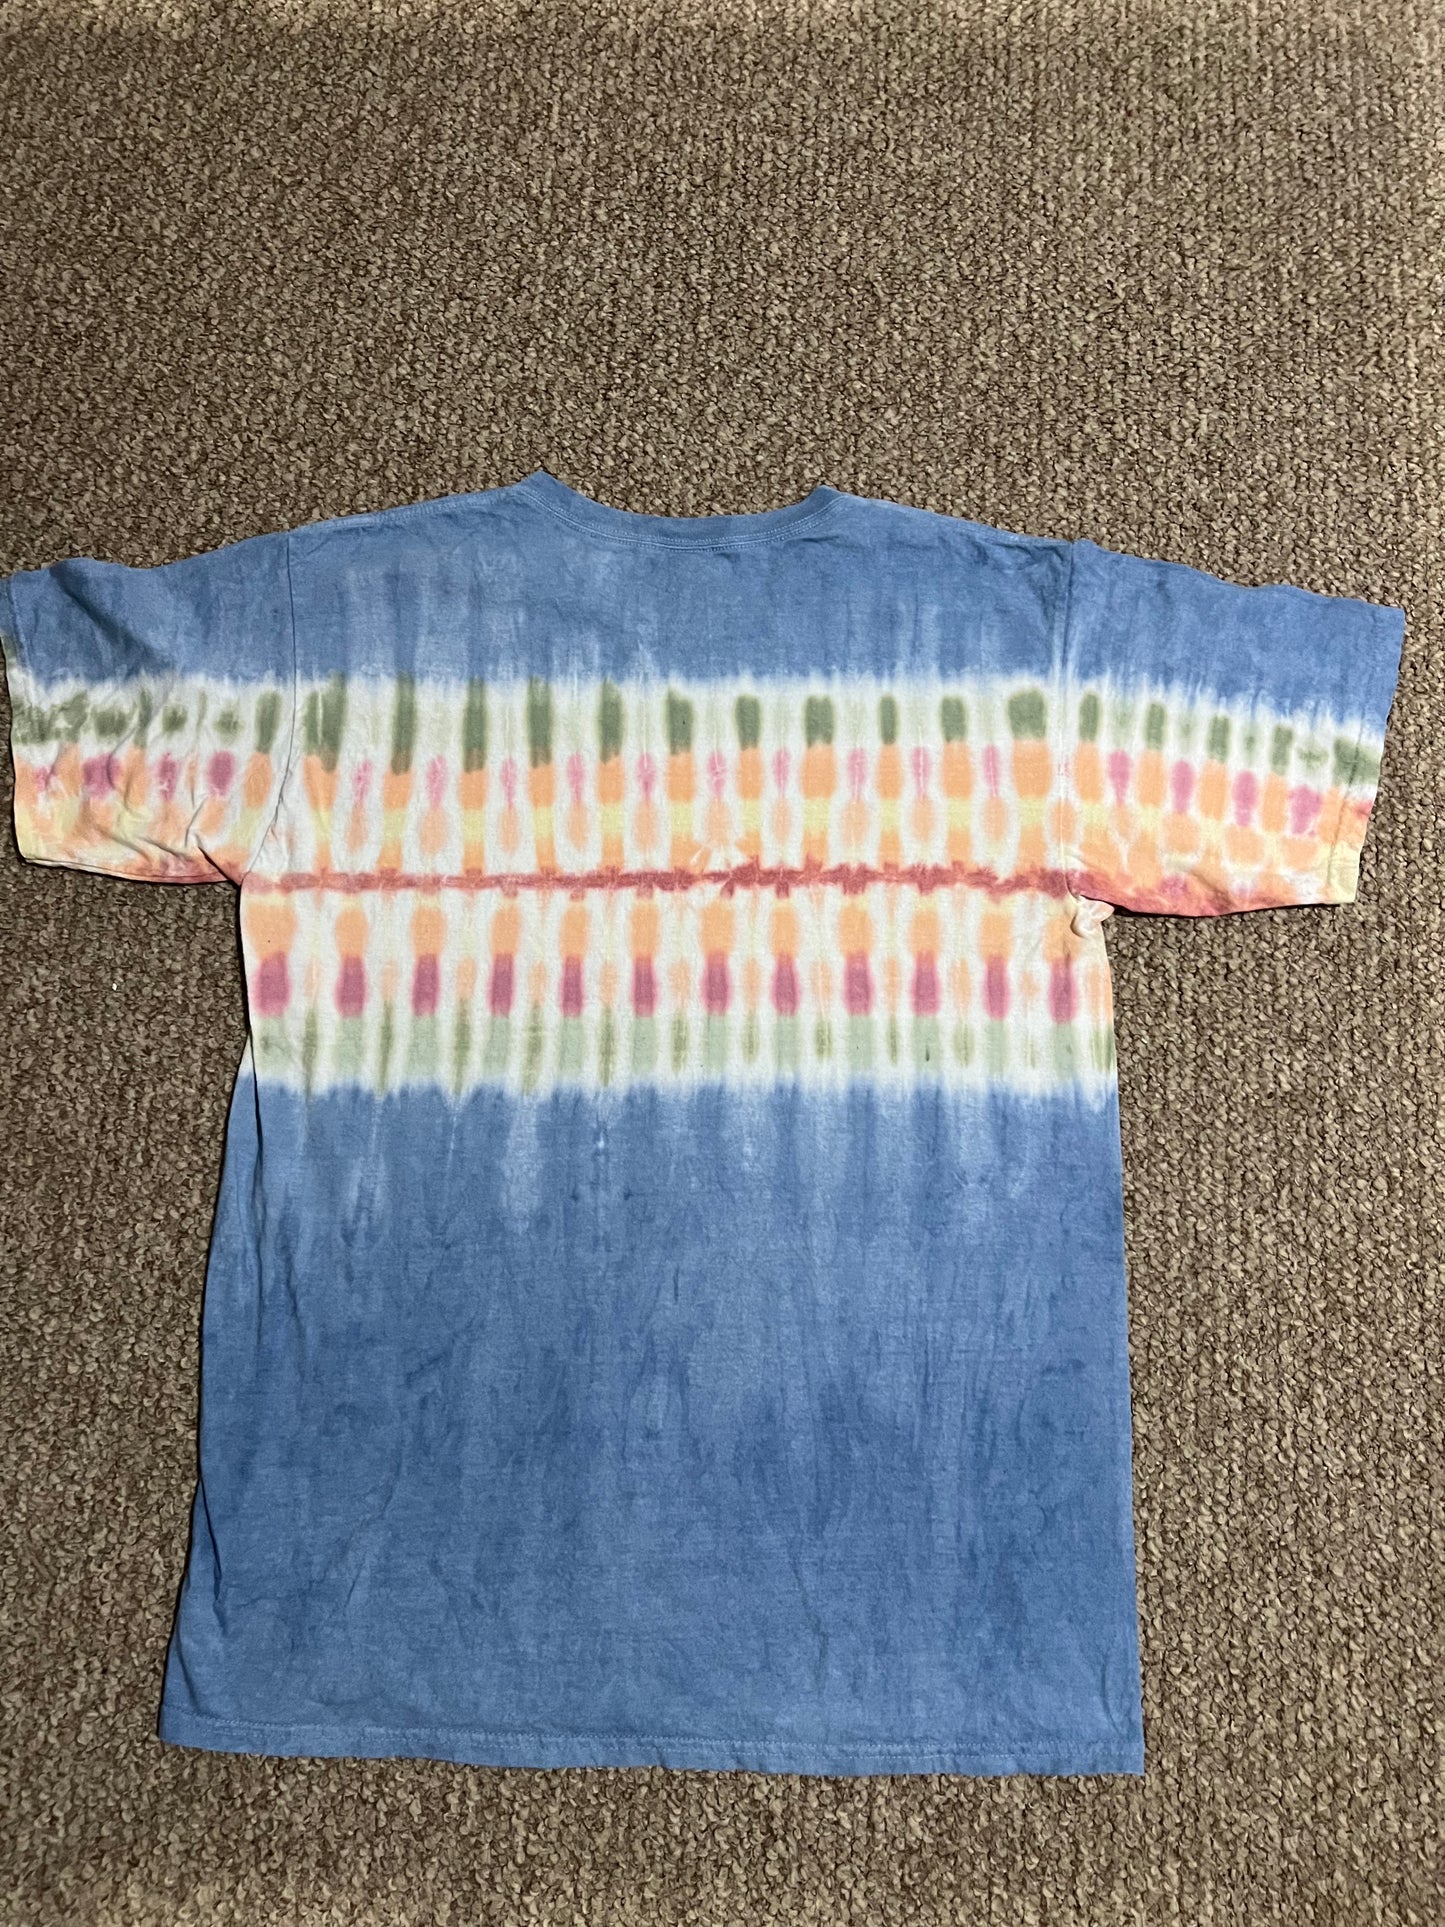 Grateful Dead Bear Track tie dye shirt - Dead Head shirts - Grateful Dead Dancing Bears shirt - Dead and Company tie dye shirt - sizes: small, medium, large, XL, 2XL, 3XL and 4XL